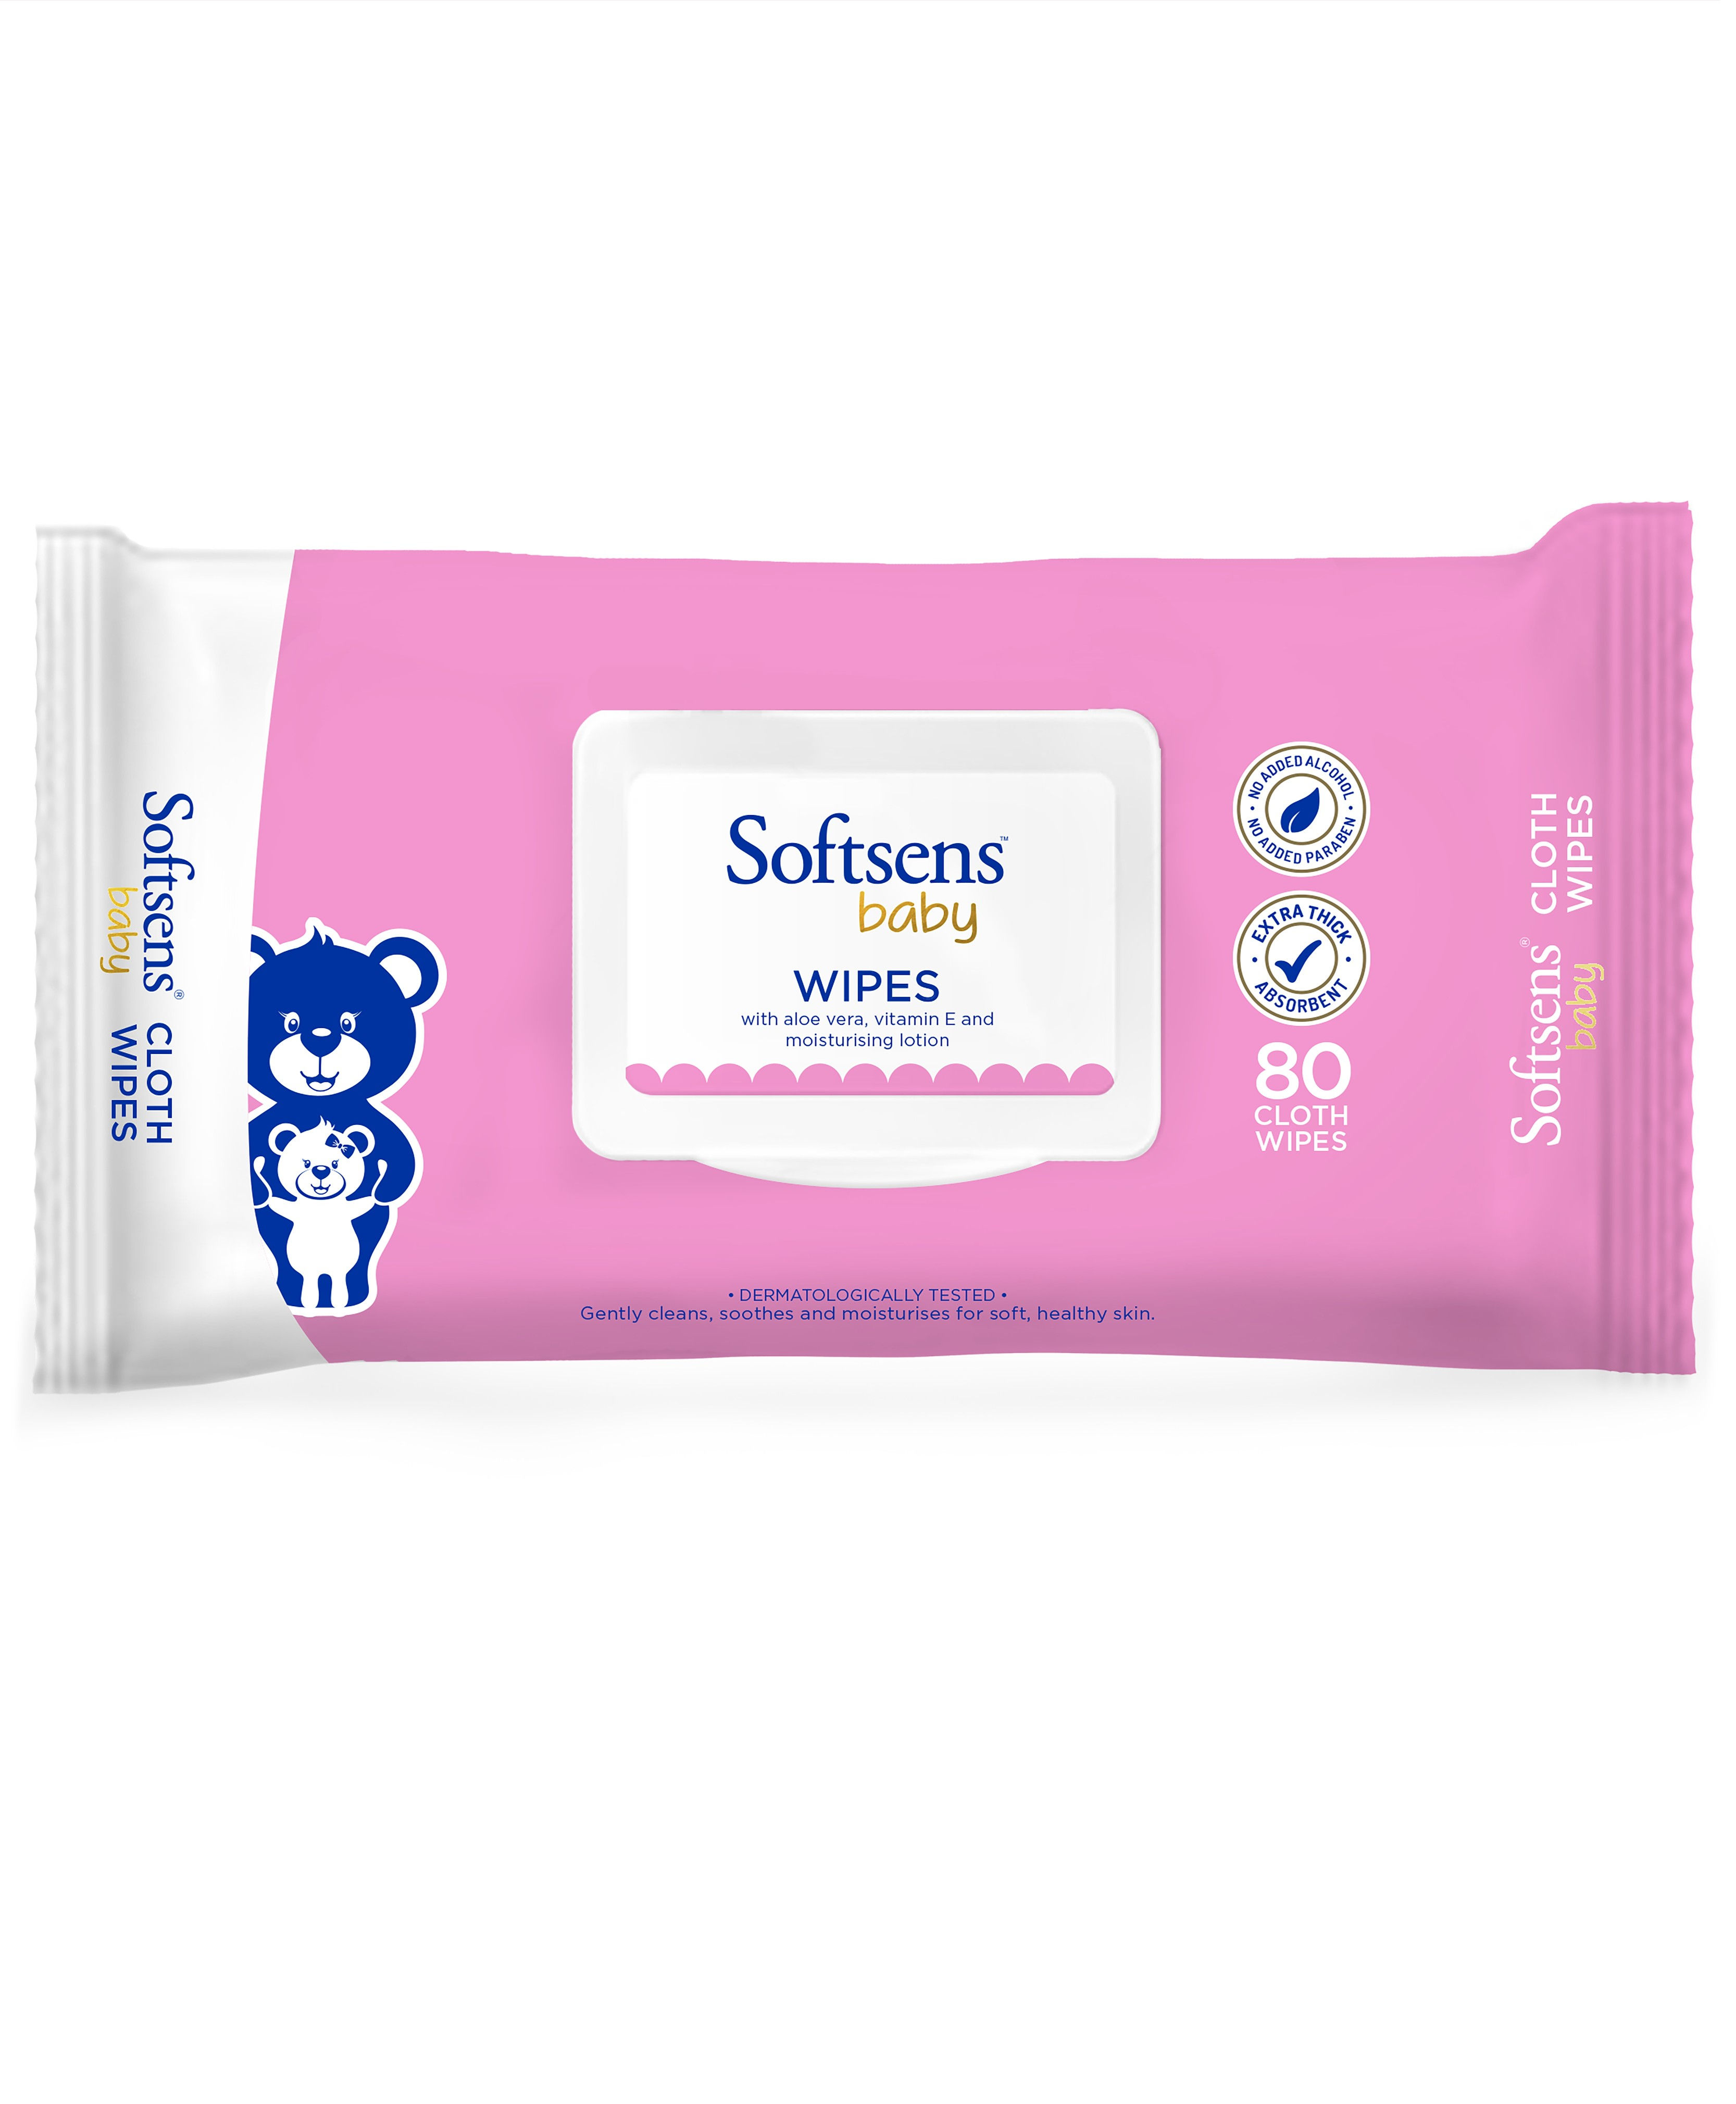 Softsens Premium Baby 80 Wipes